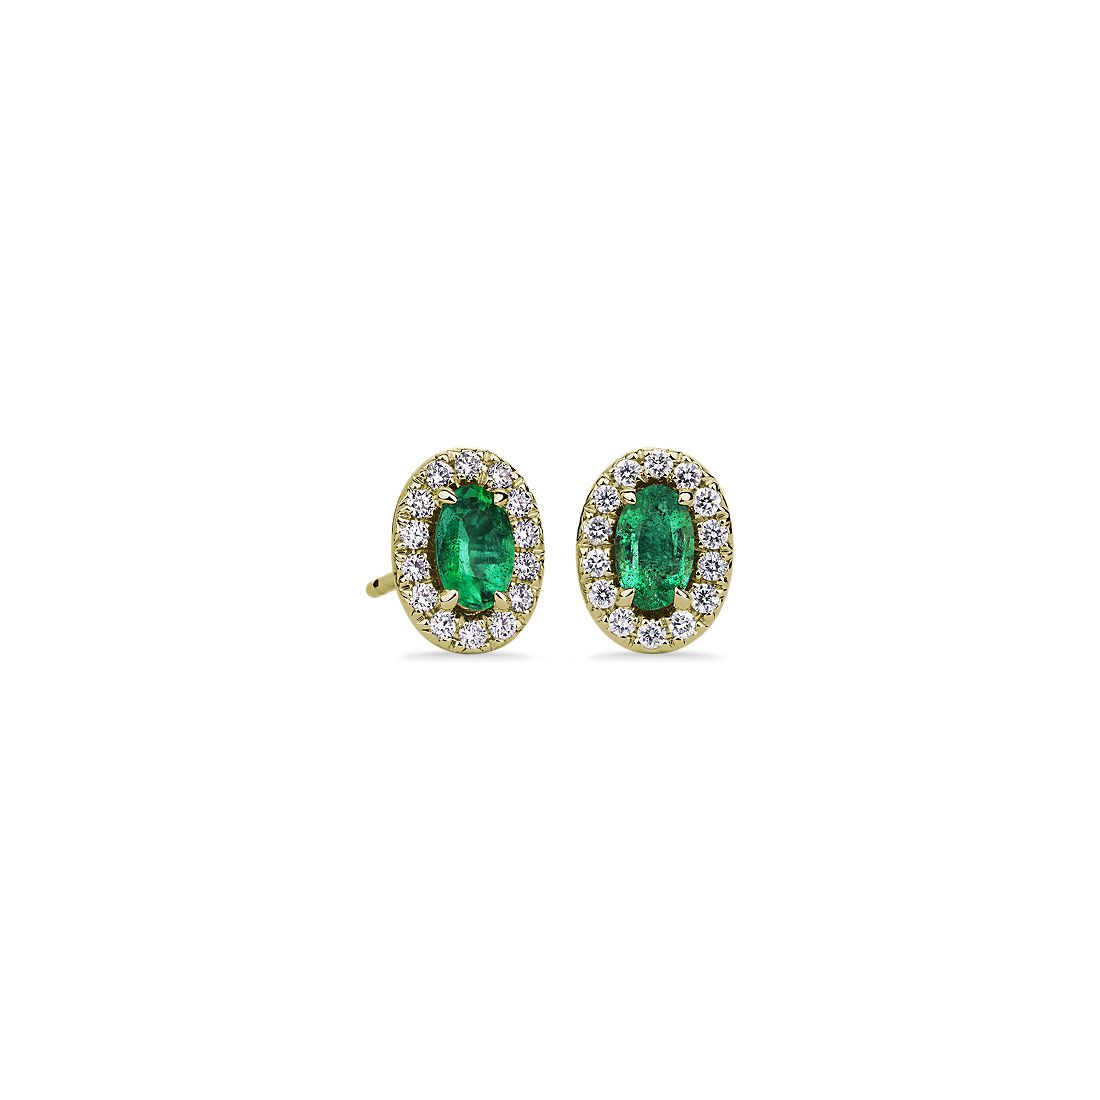 Oval Emerald Halo Stud Earrings in 14k Yellow Gold (5x3mm)